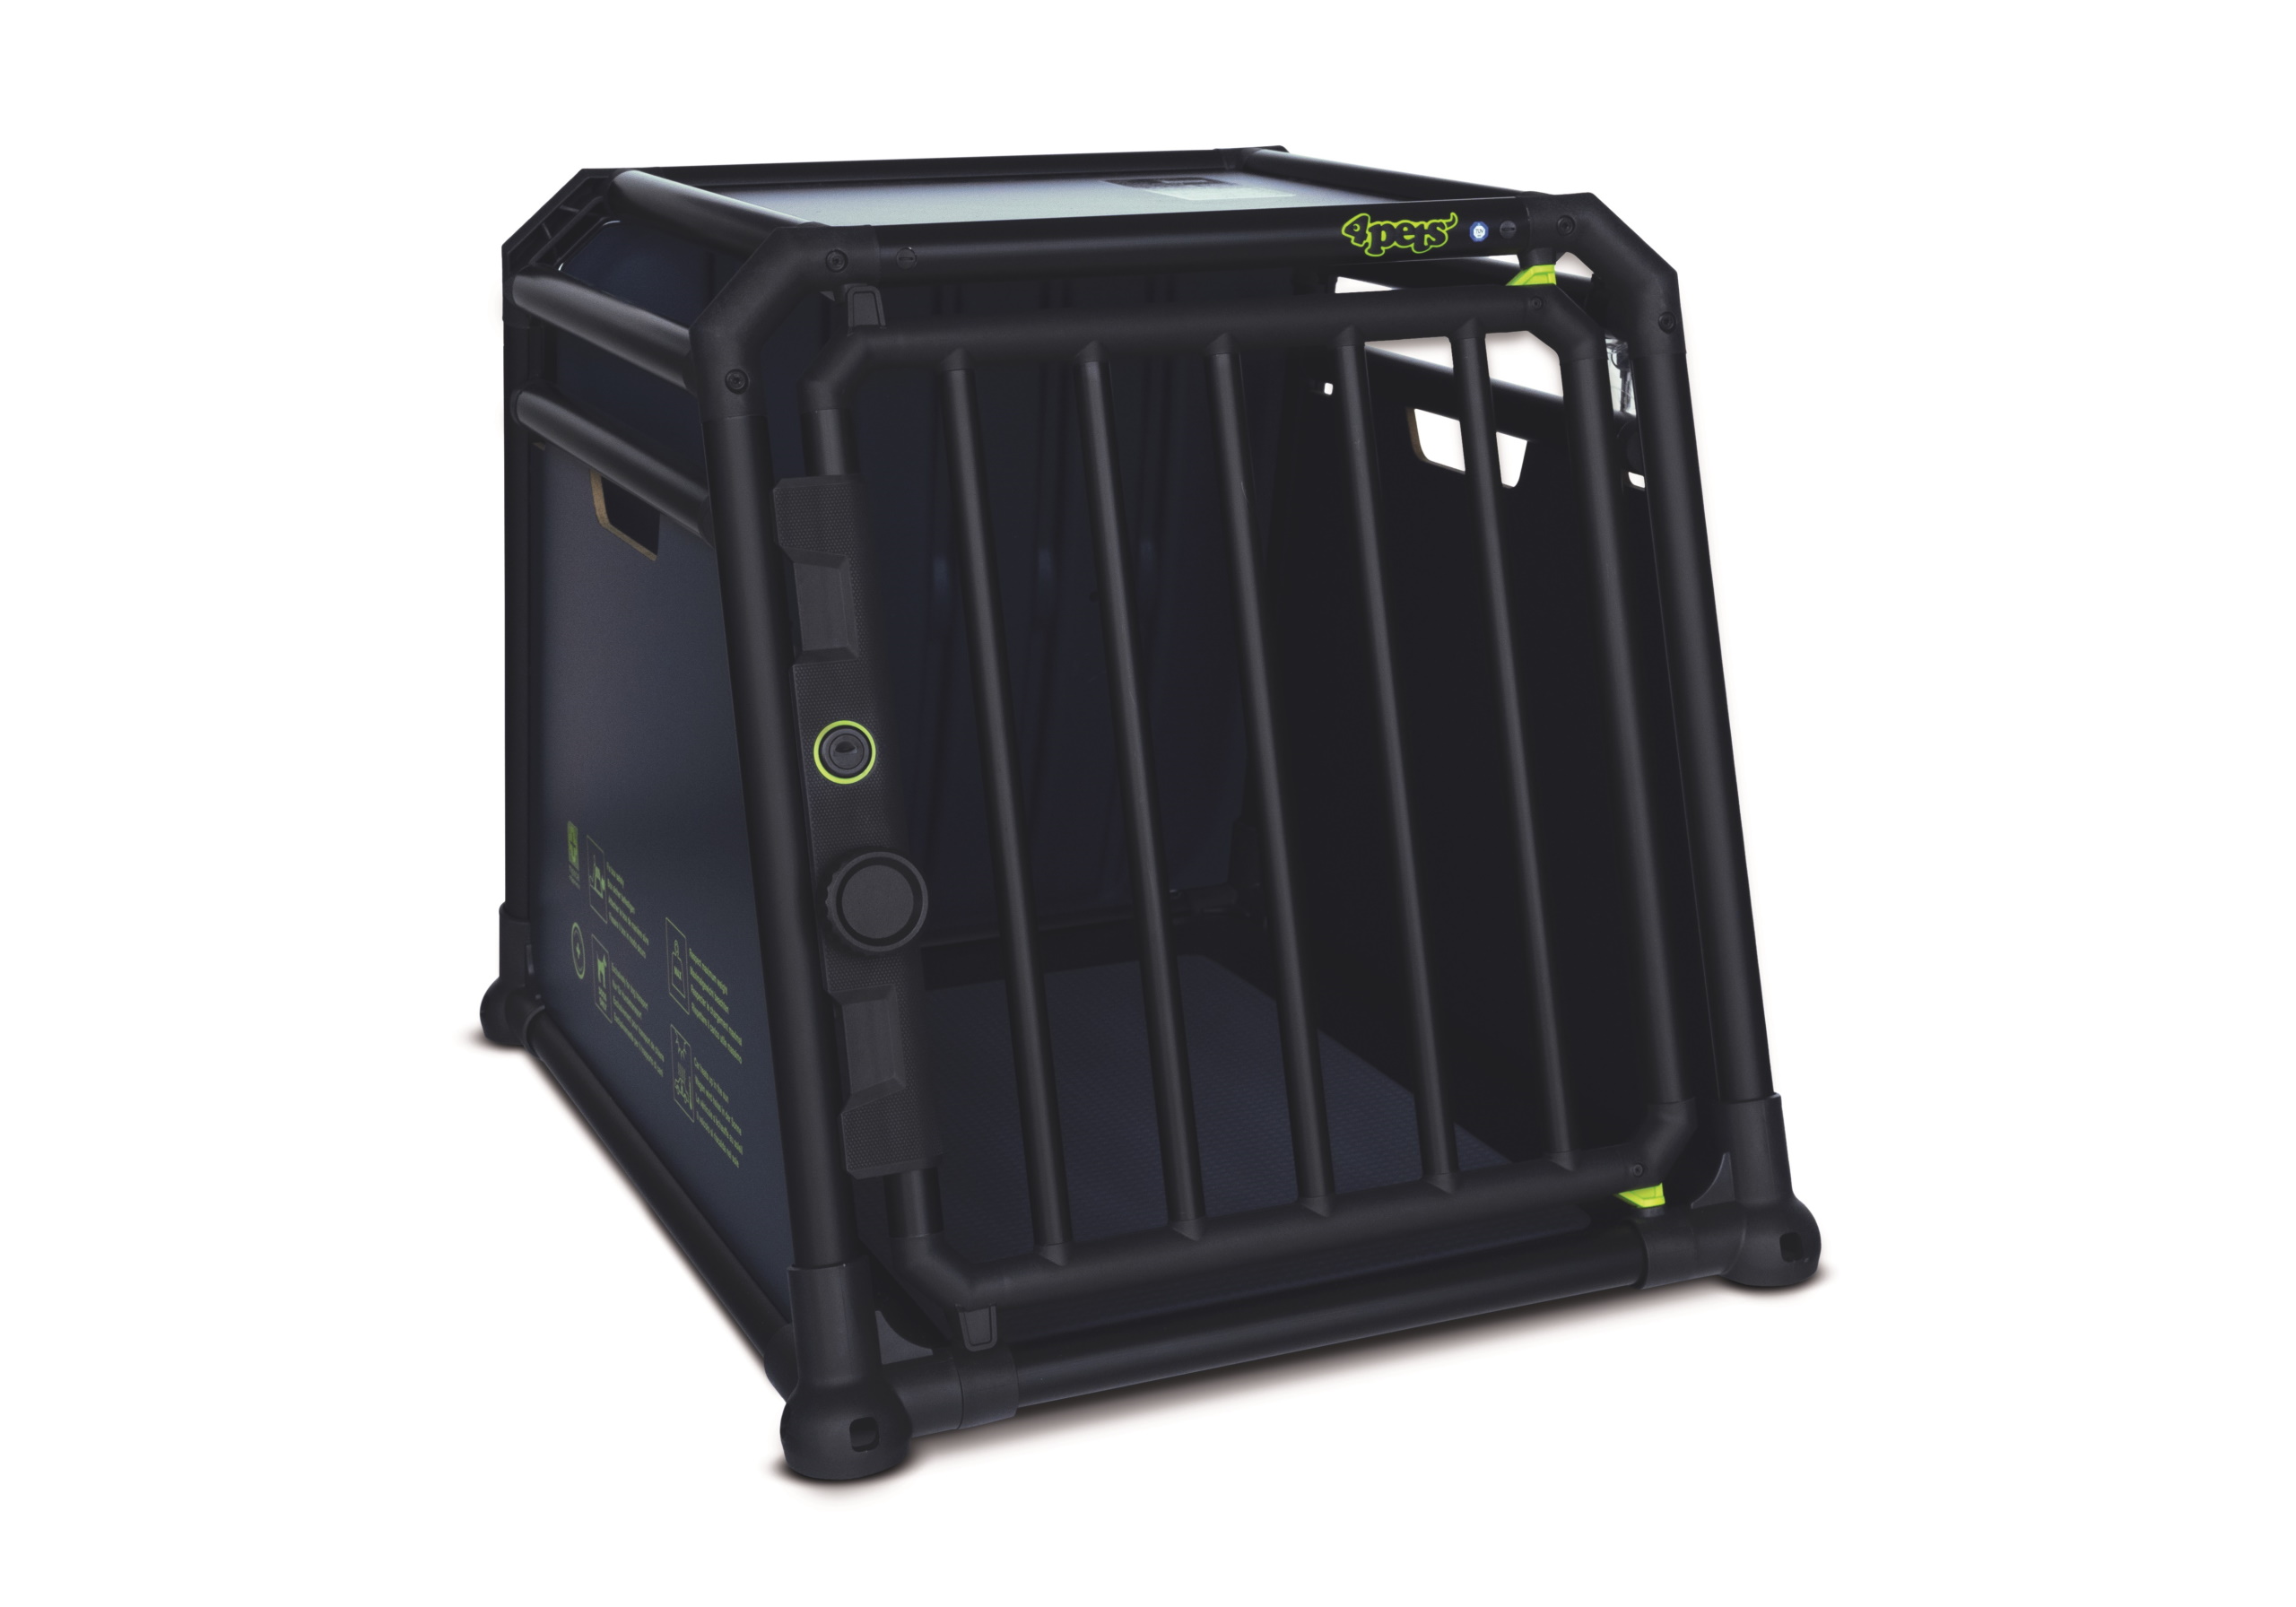 :4pets PRO, TV-approved black dog cage, size 1